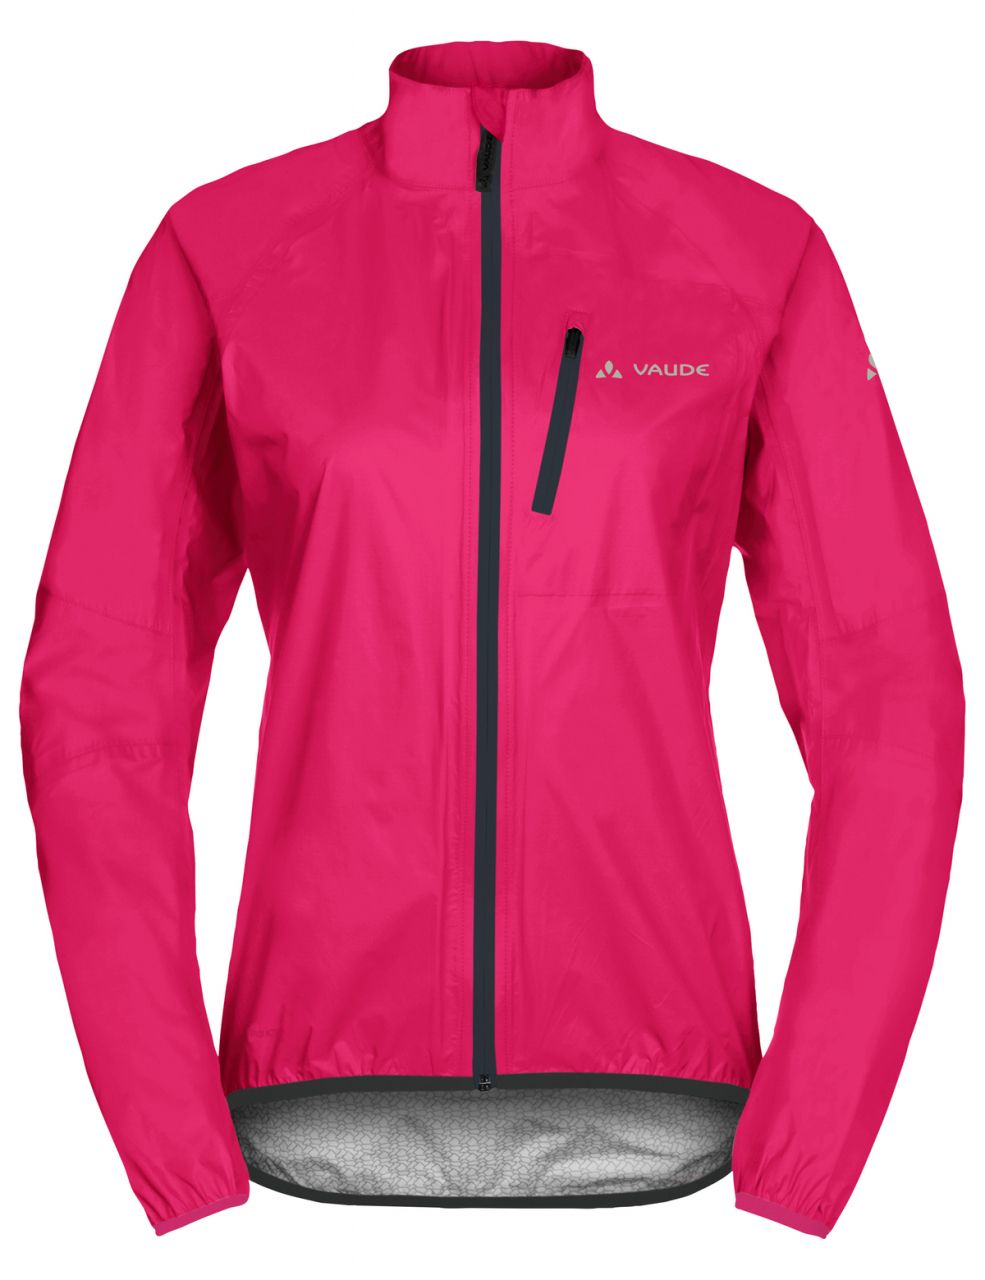 Vaude Drop Jacket III - Cycling jacket - Women's